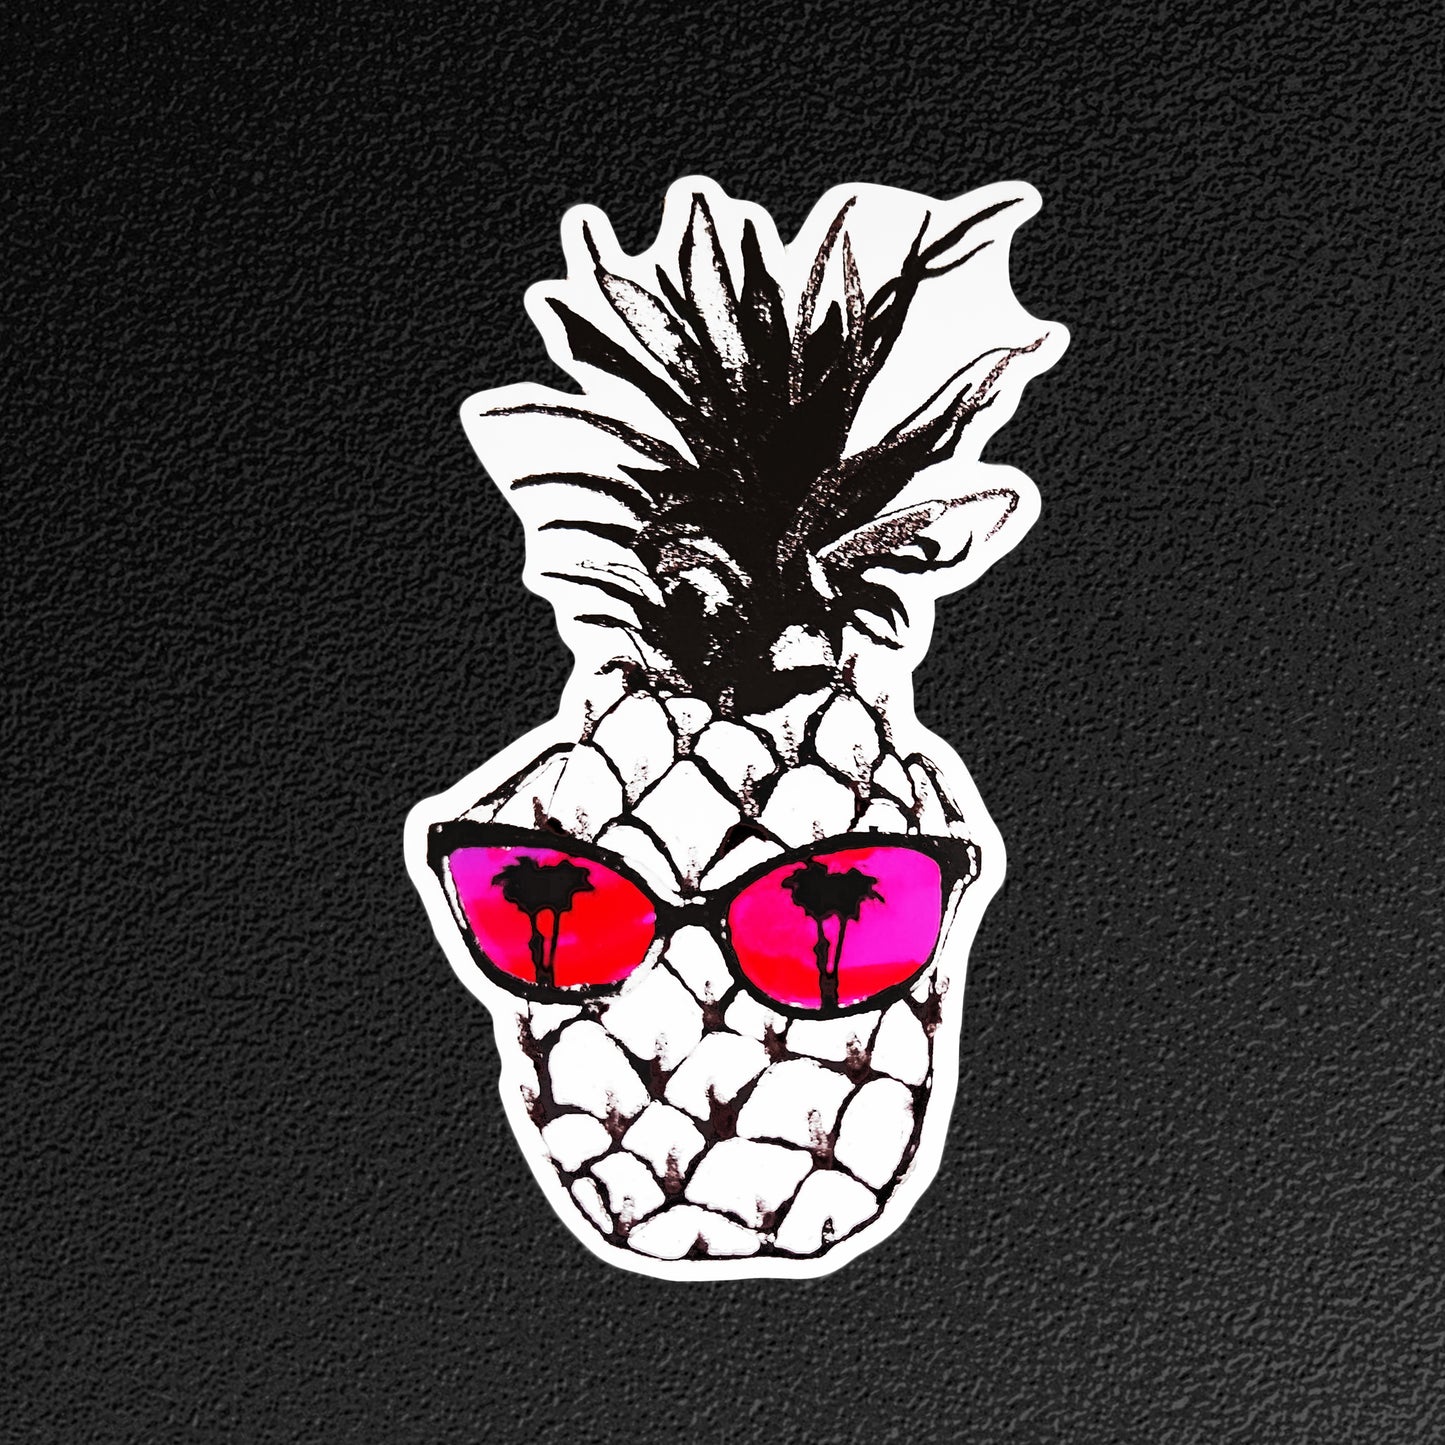 Hot Pineapple in Pink Vinyl Sticker/Decal